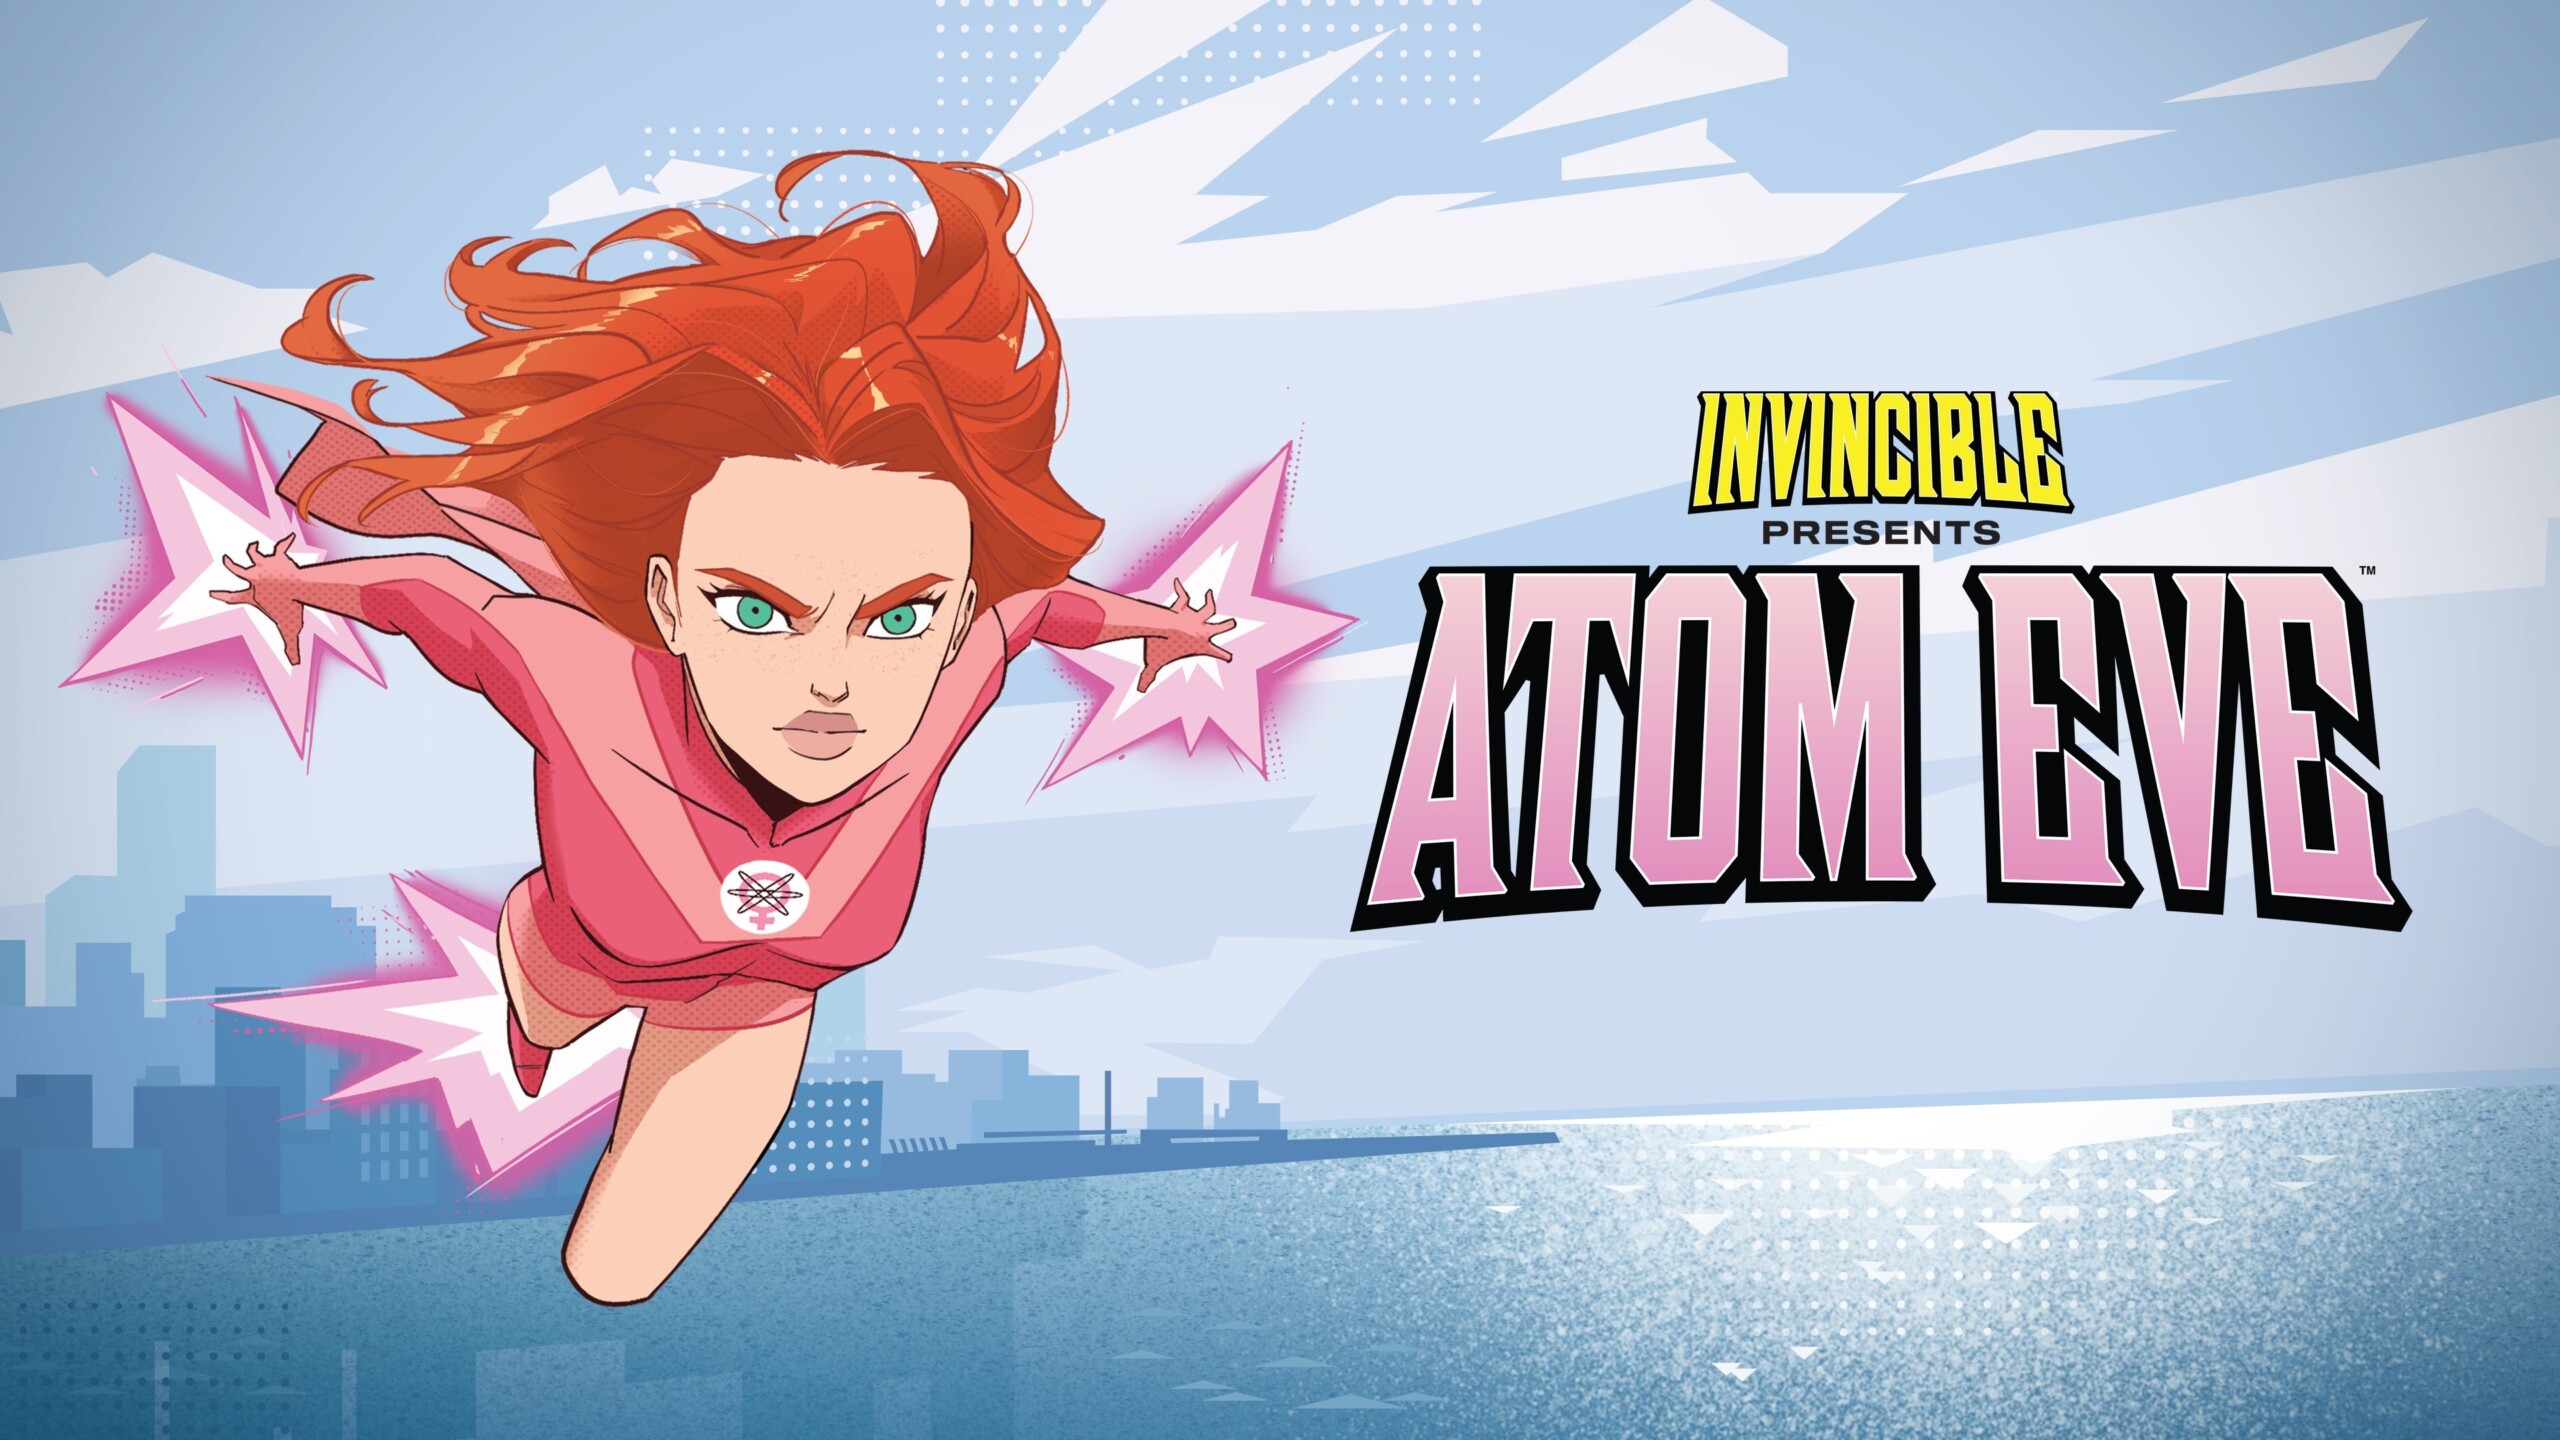 Invincible Presents: Atom Eve Review